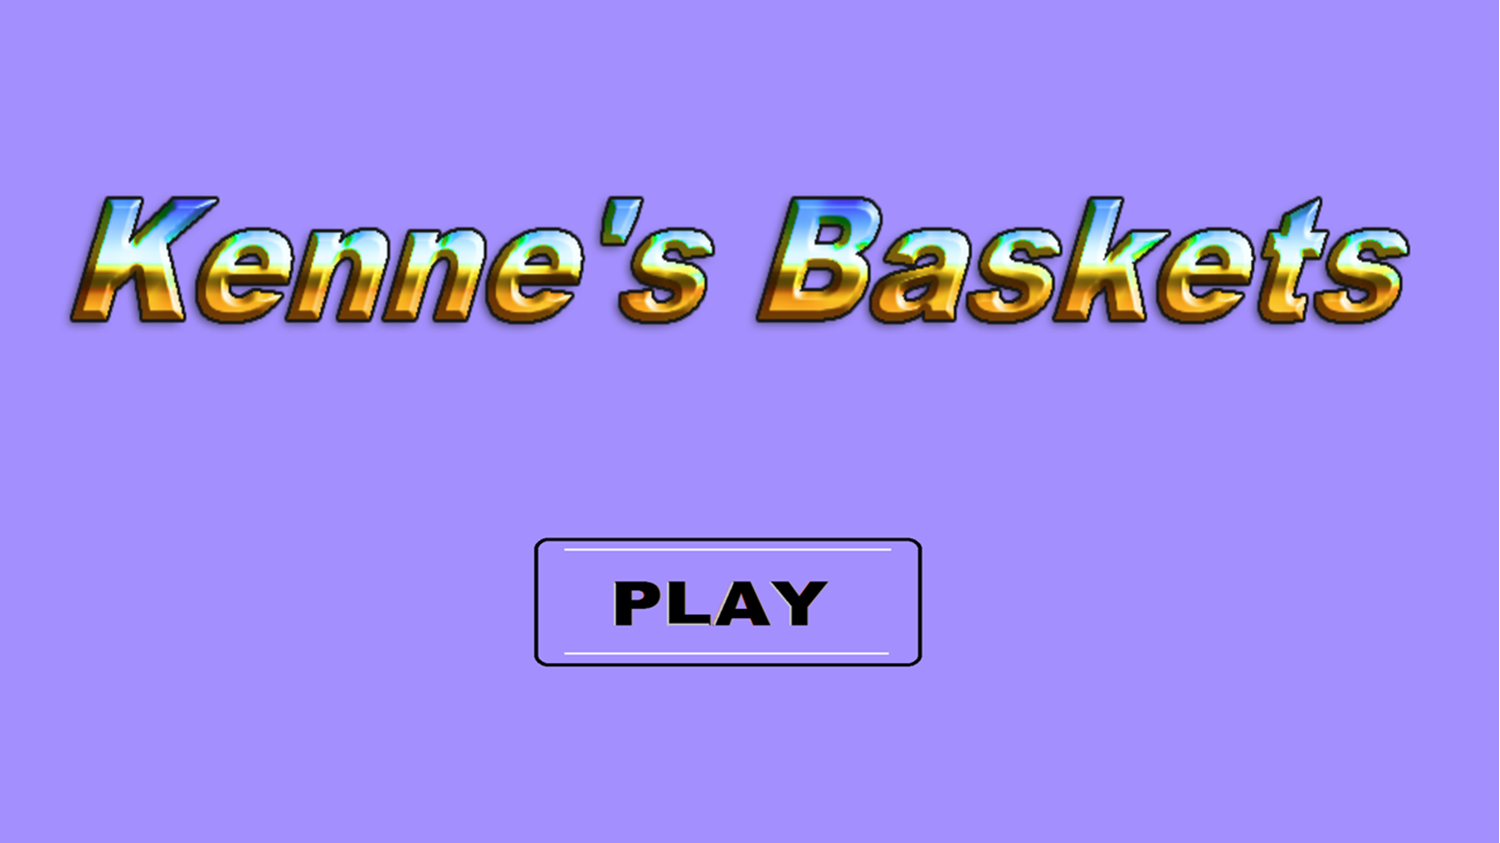 Kenne's Baskets Game Welcome Screen Screenshot.